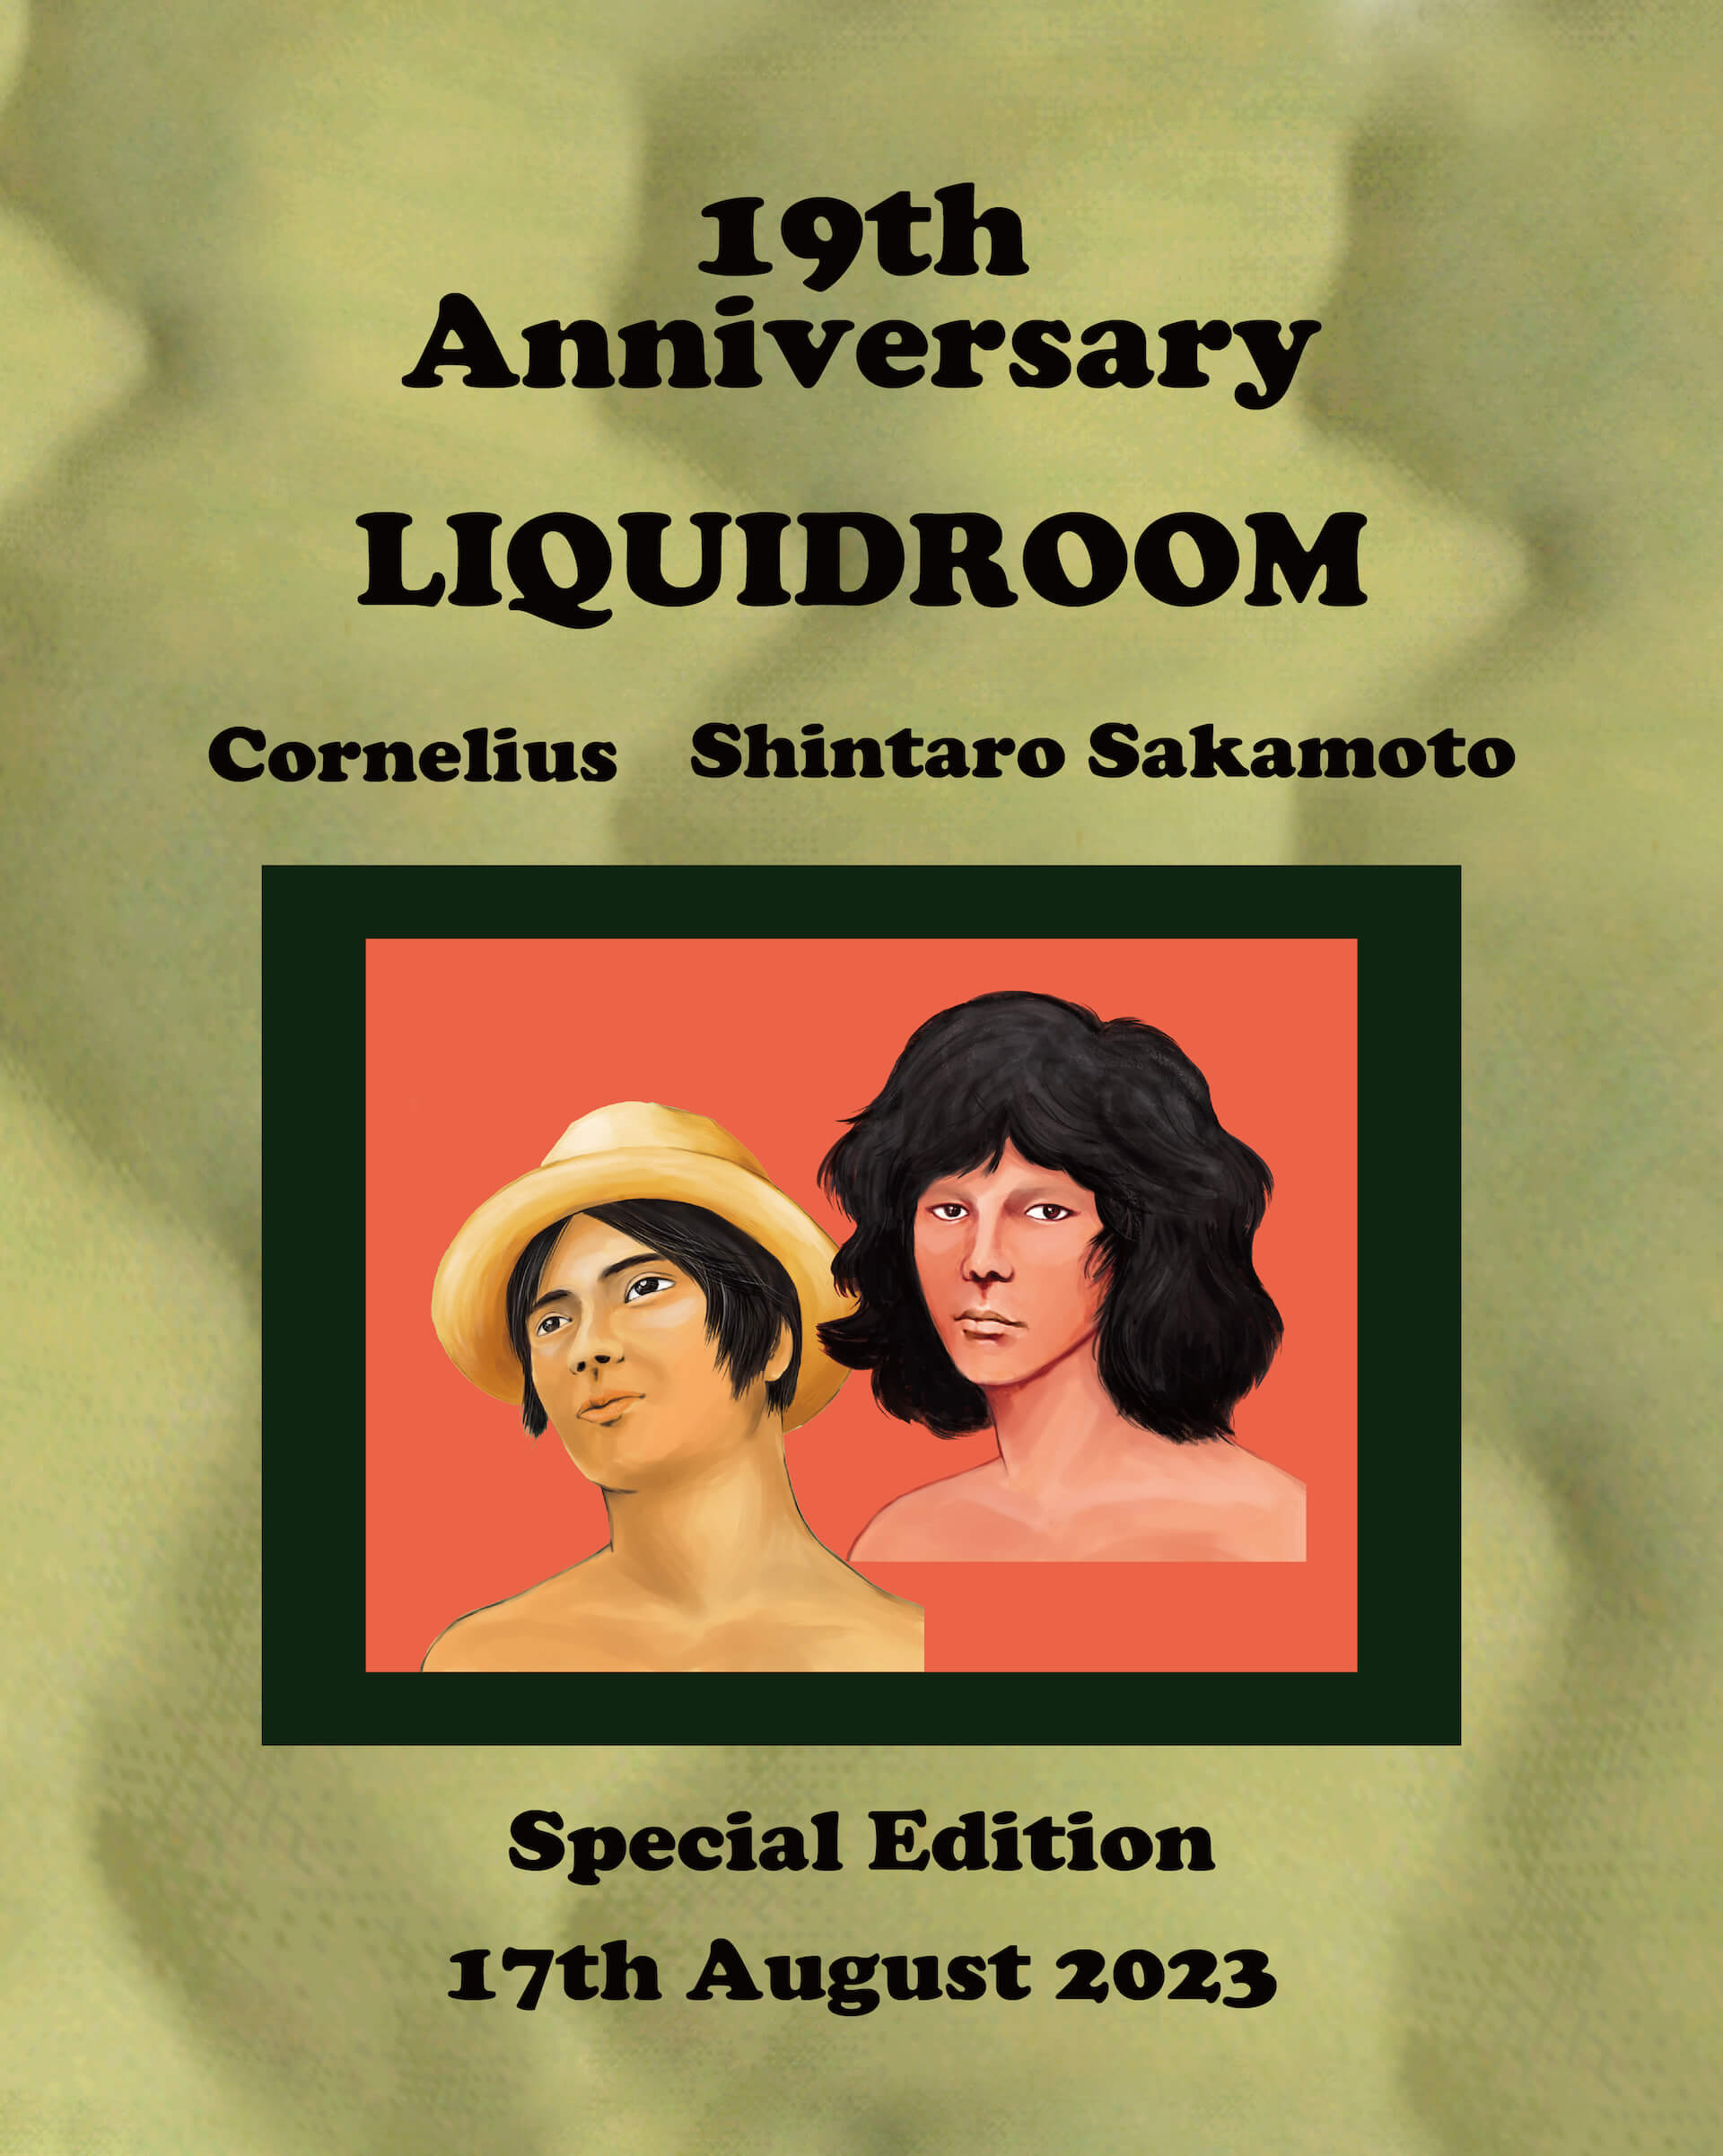 Corneliusと坂本慎太郎による2マンライブが実現、LIQUIDROOM19周年公演にて music230526-cornelius-sakamotoshintaro2